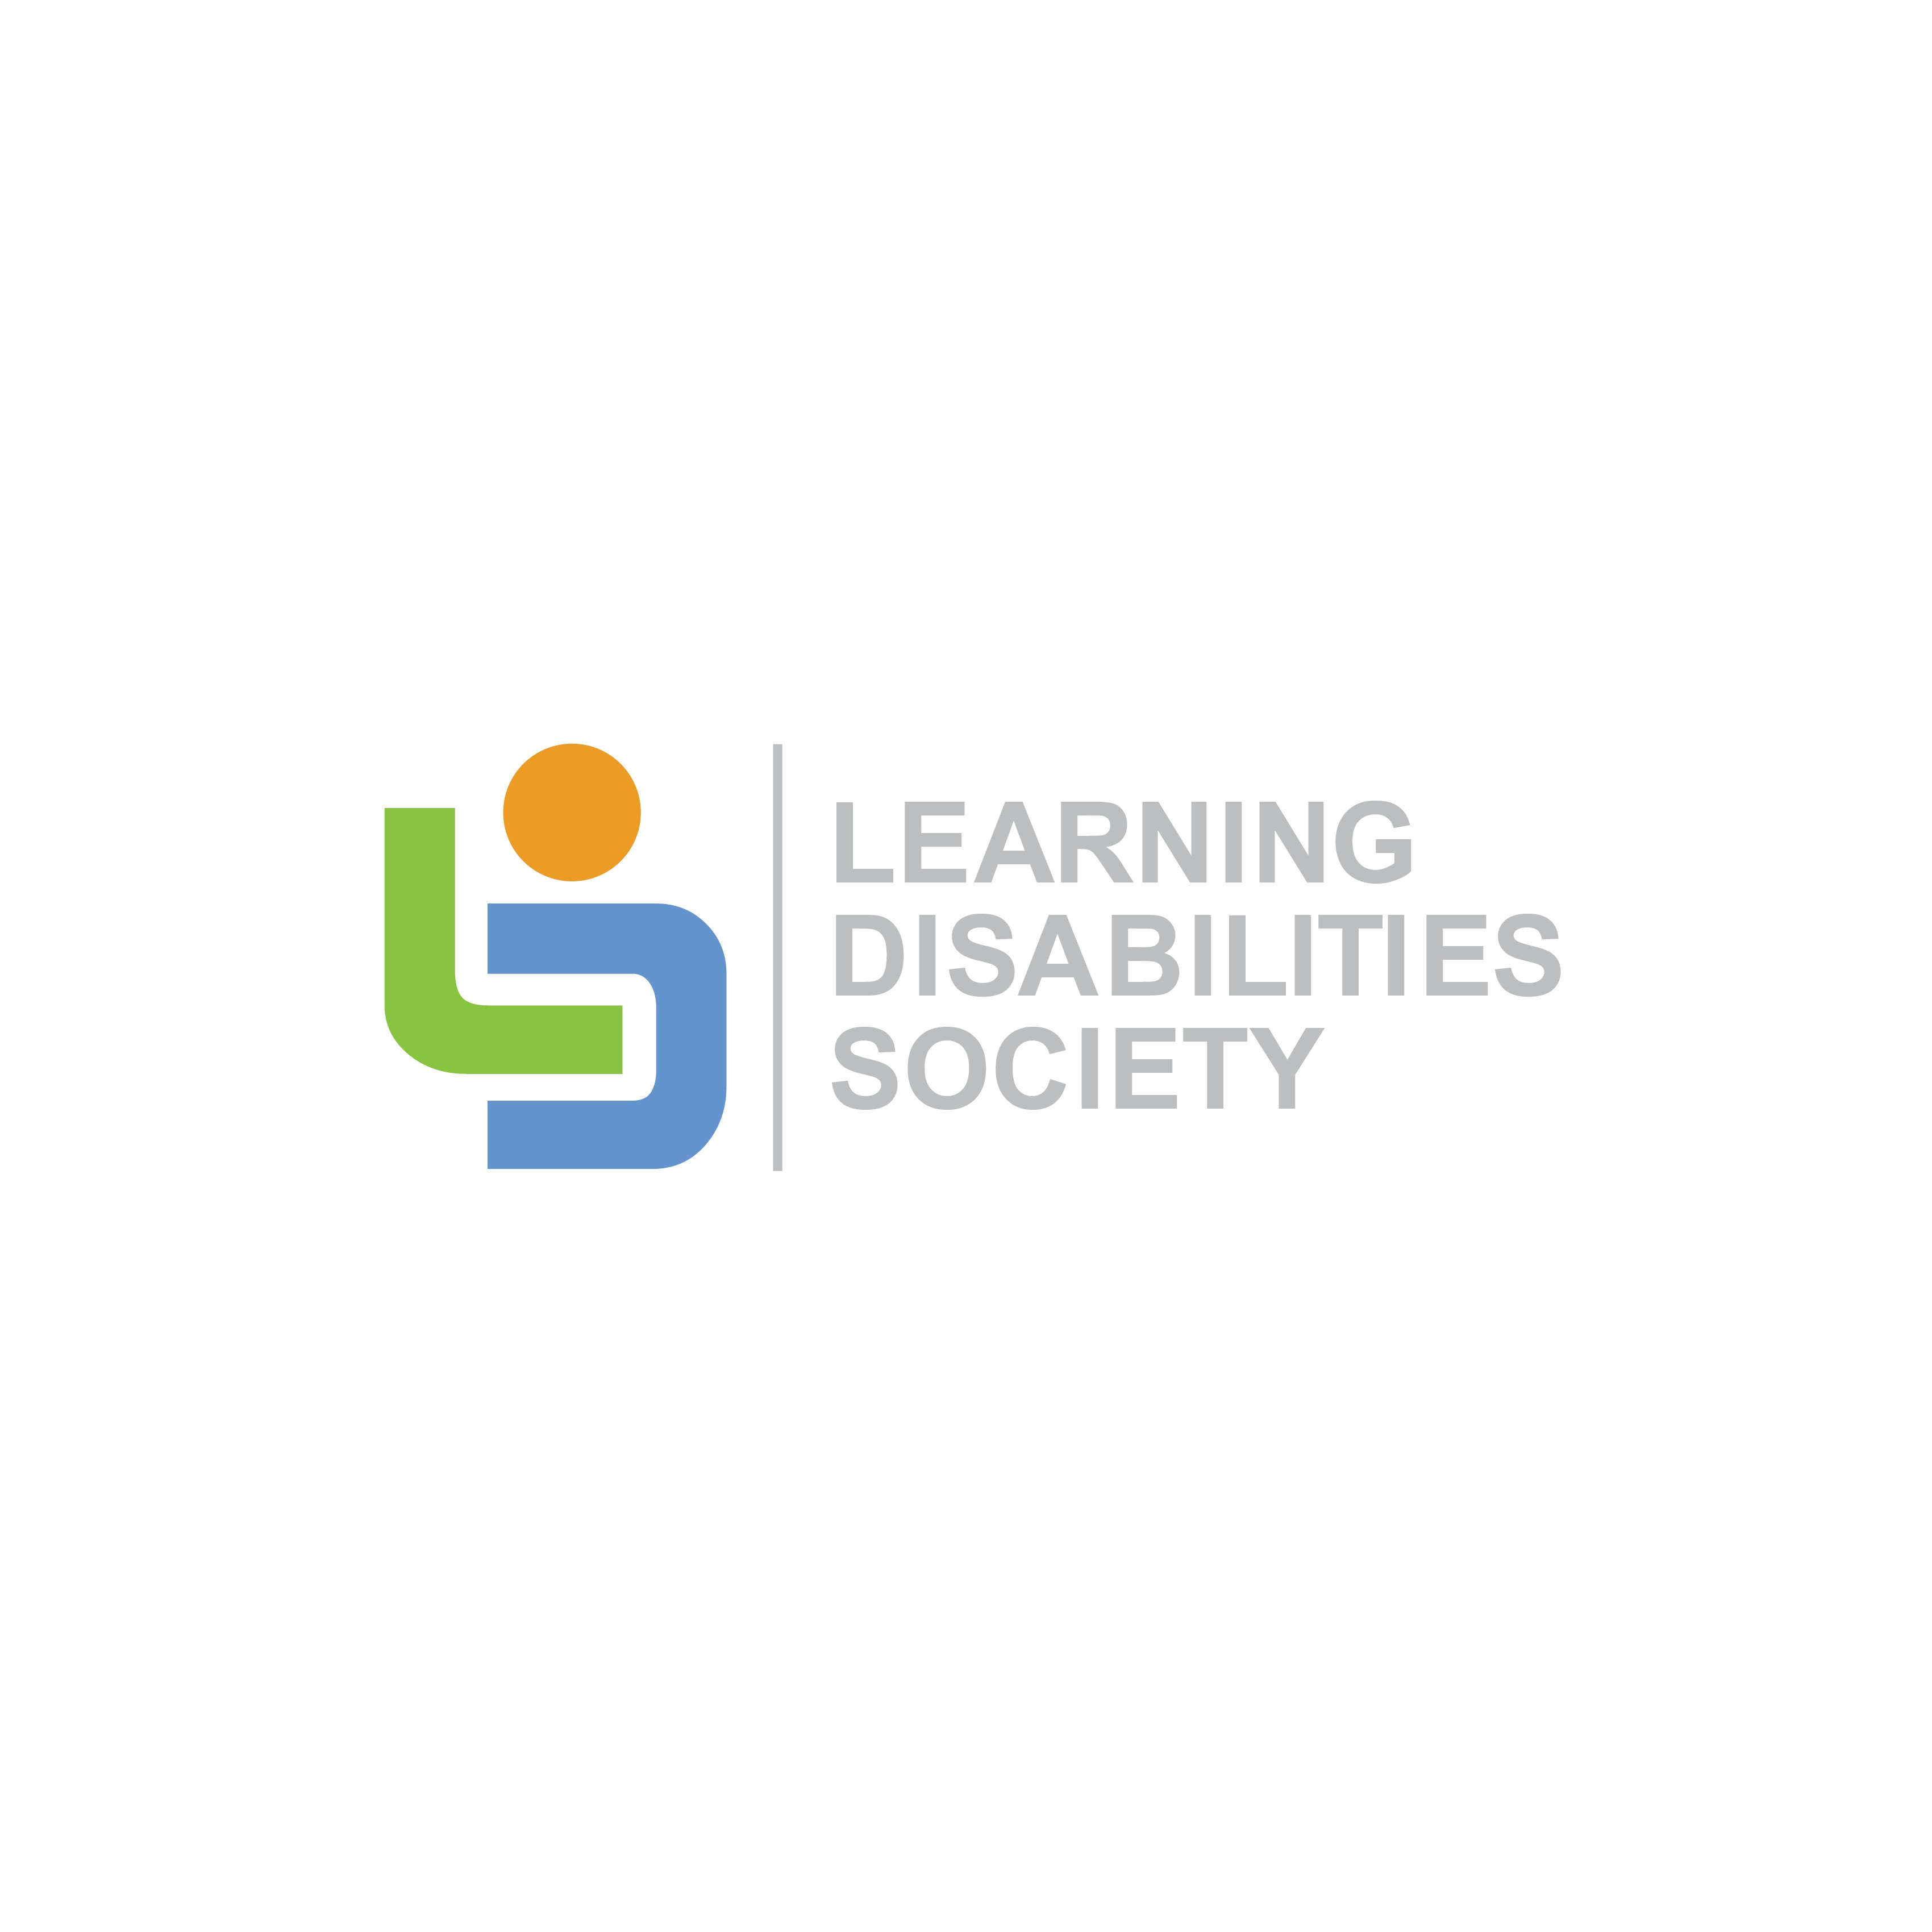 LDS-logo